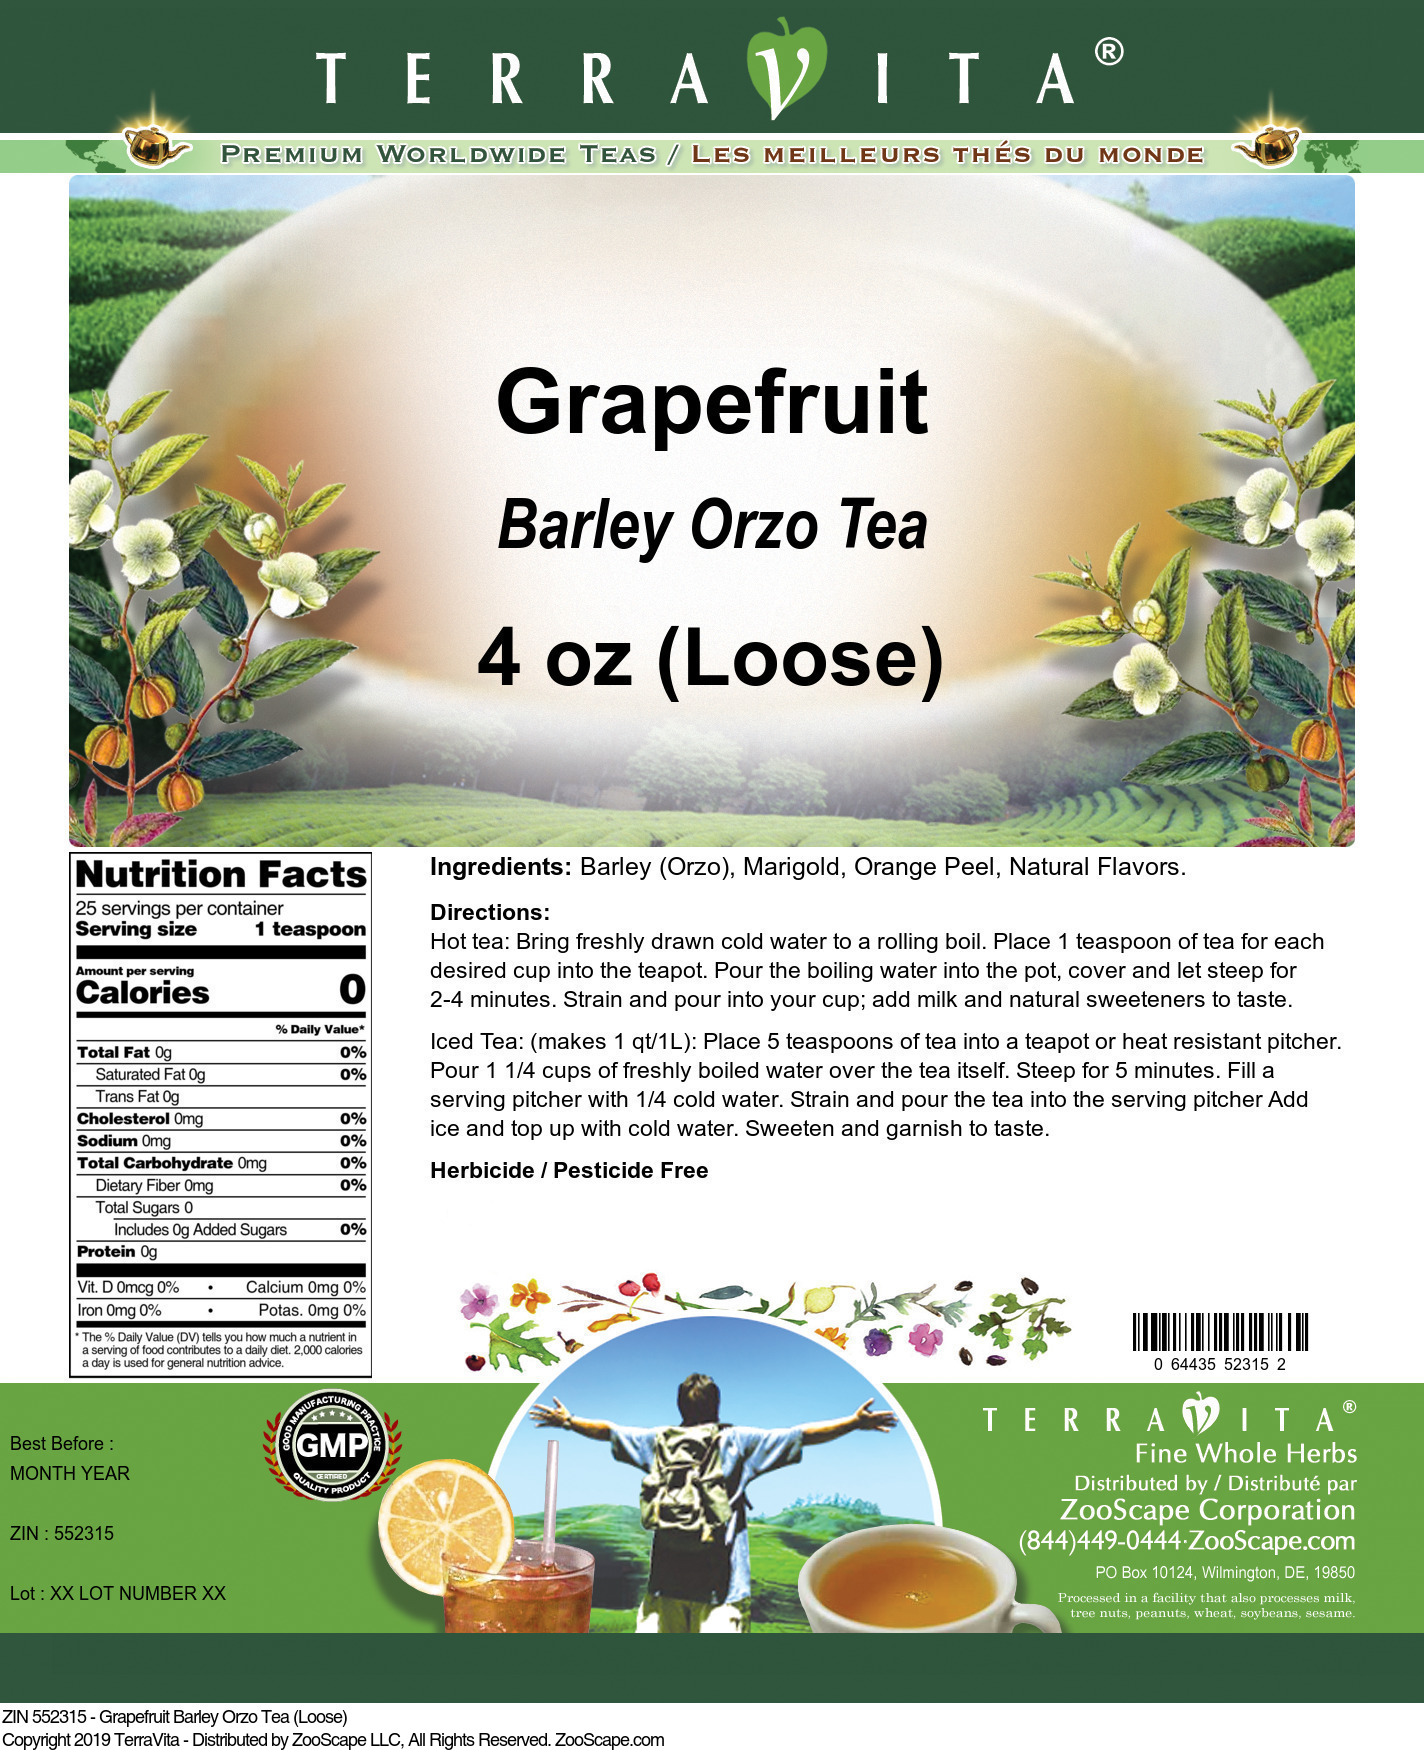 Grapefruit Barley Orzo Tea (Loose) - Label